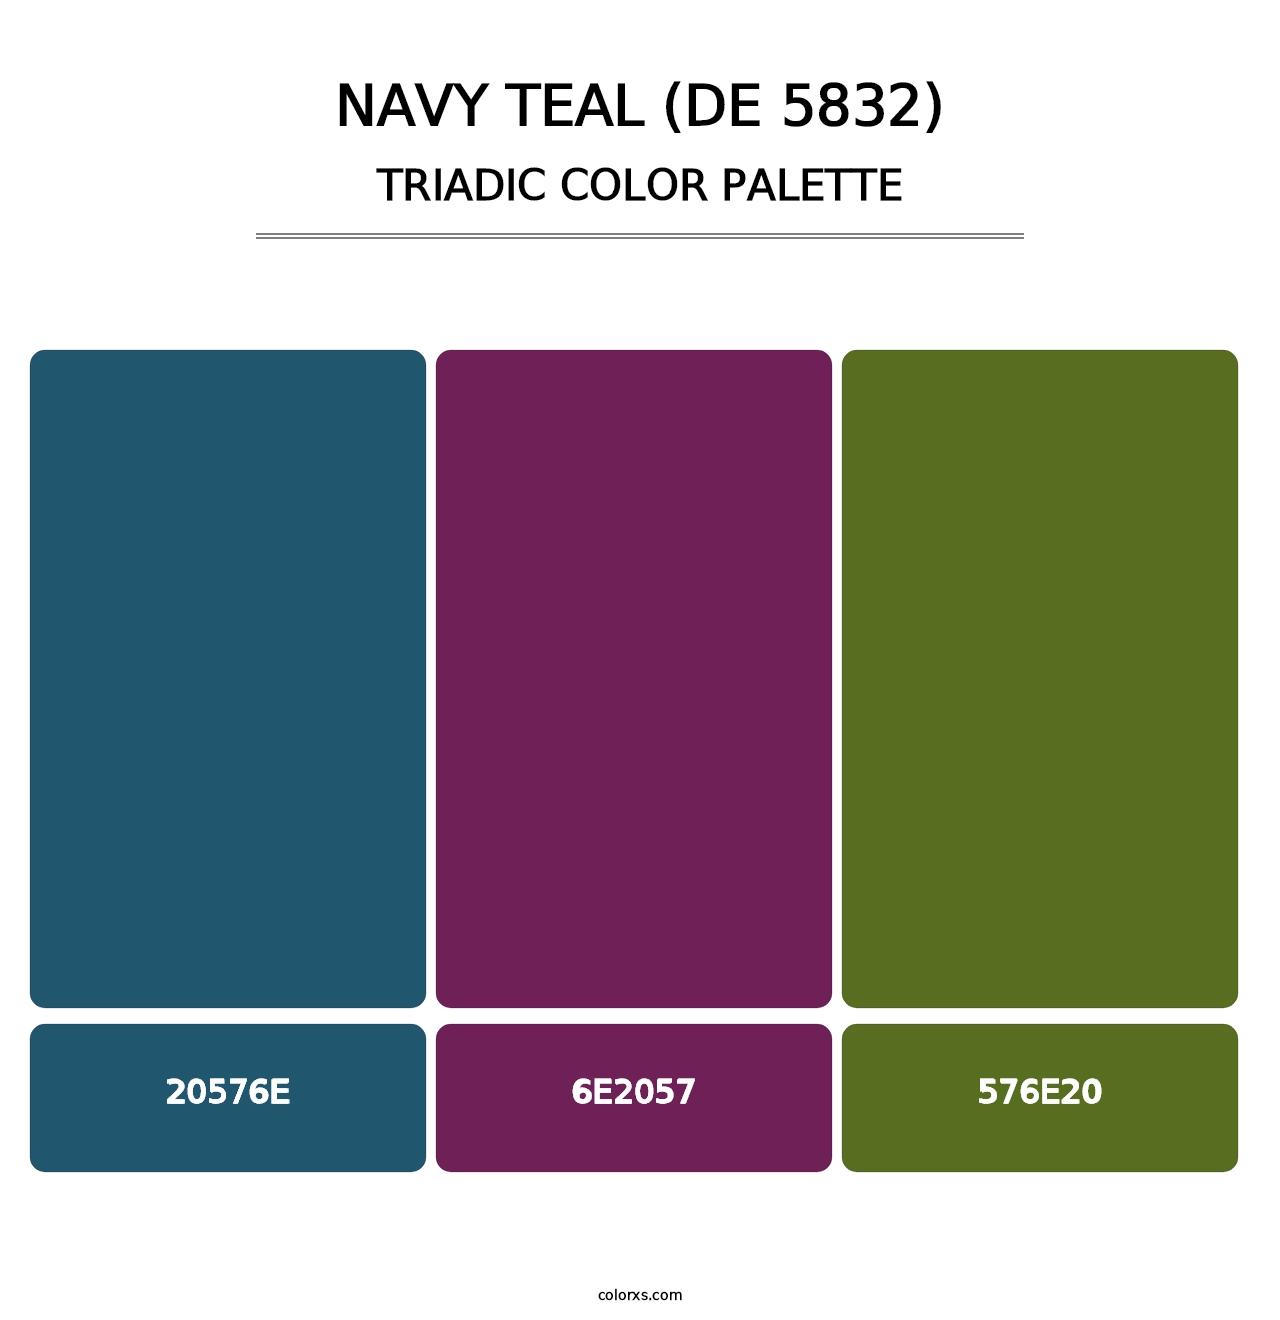 Navy Teal (DE 5832) - Triadic Color Palette